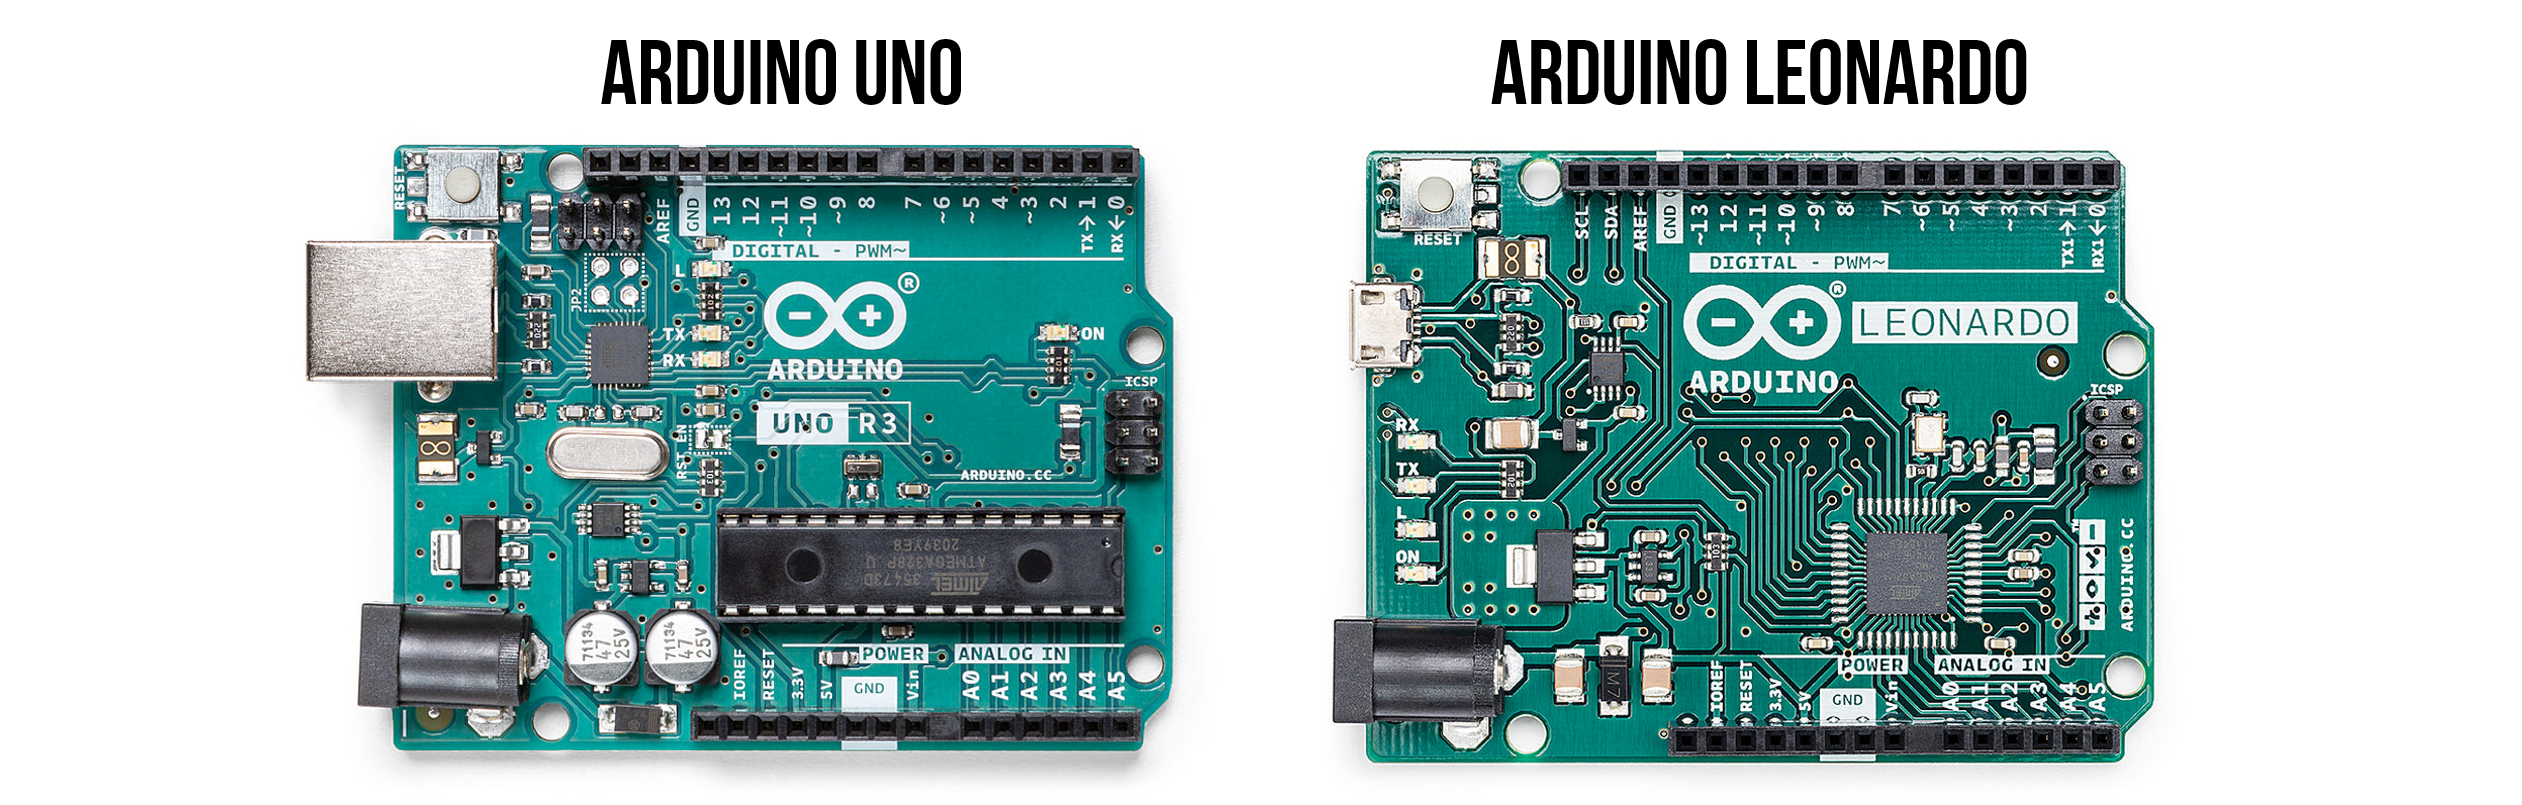 Image showing both the Arduino Uno and the Arduino Leonardo